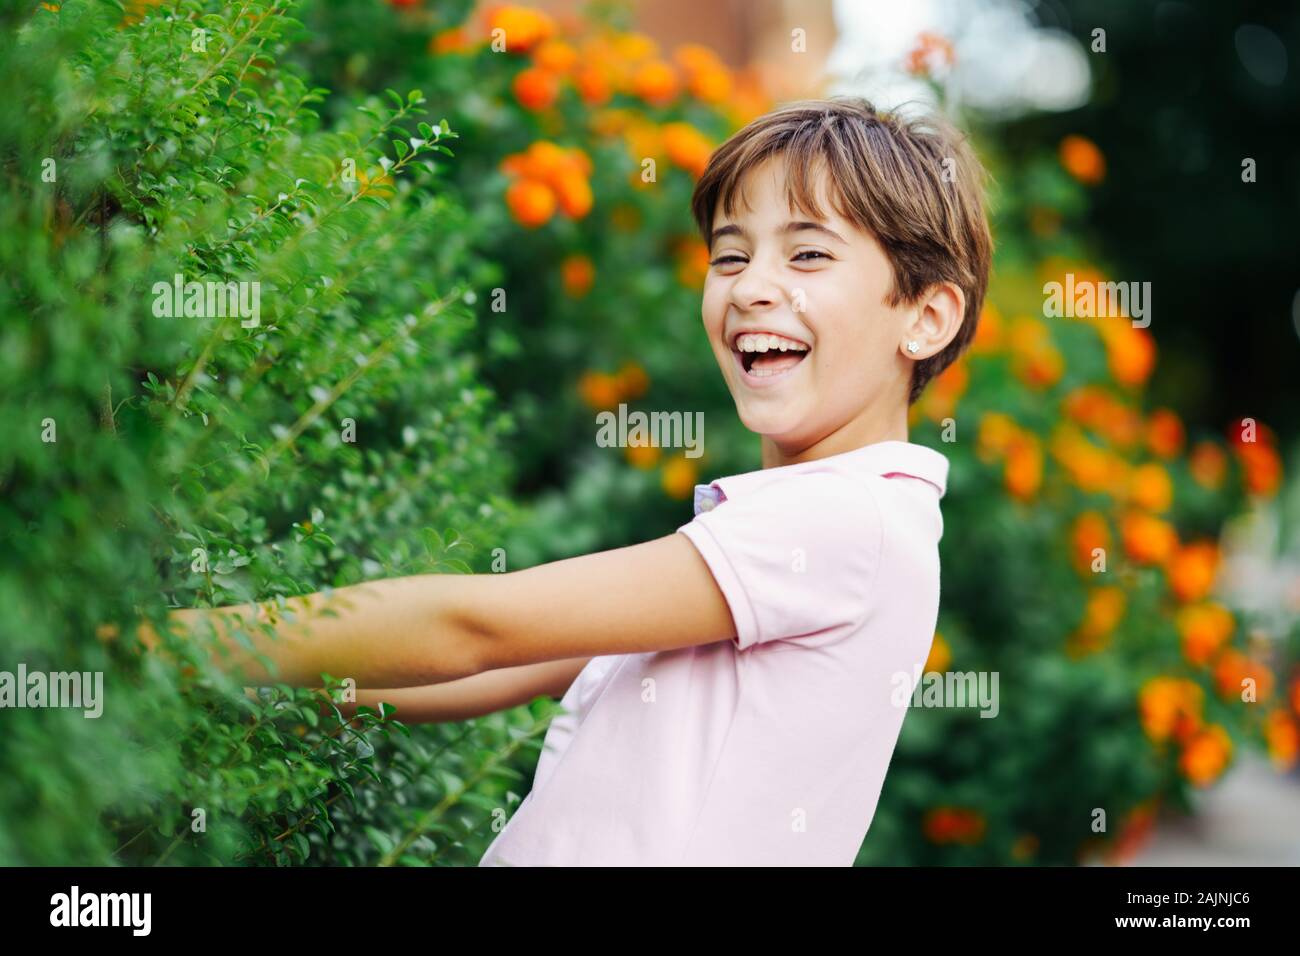 Little girl, eight years old, having fun in an urban park. Stock Photo